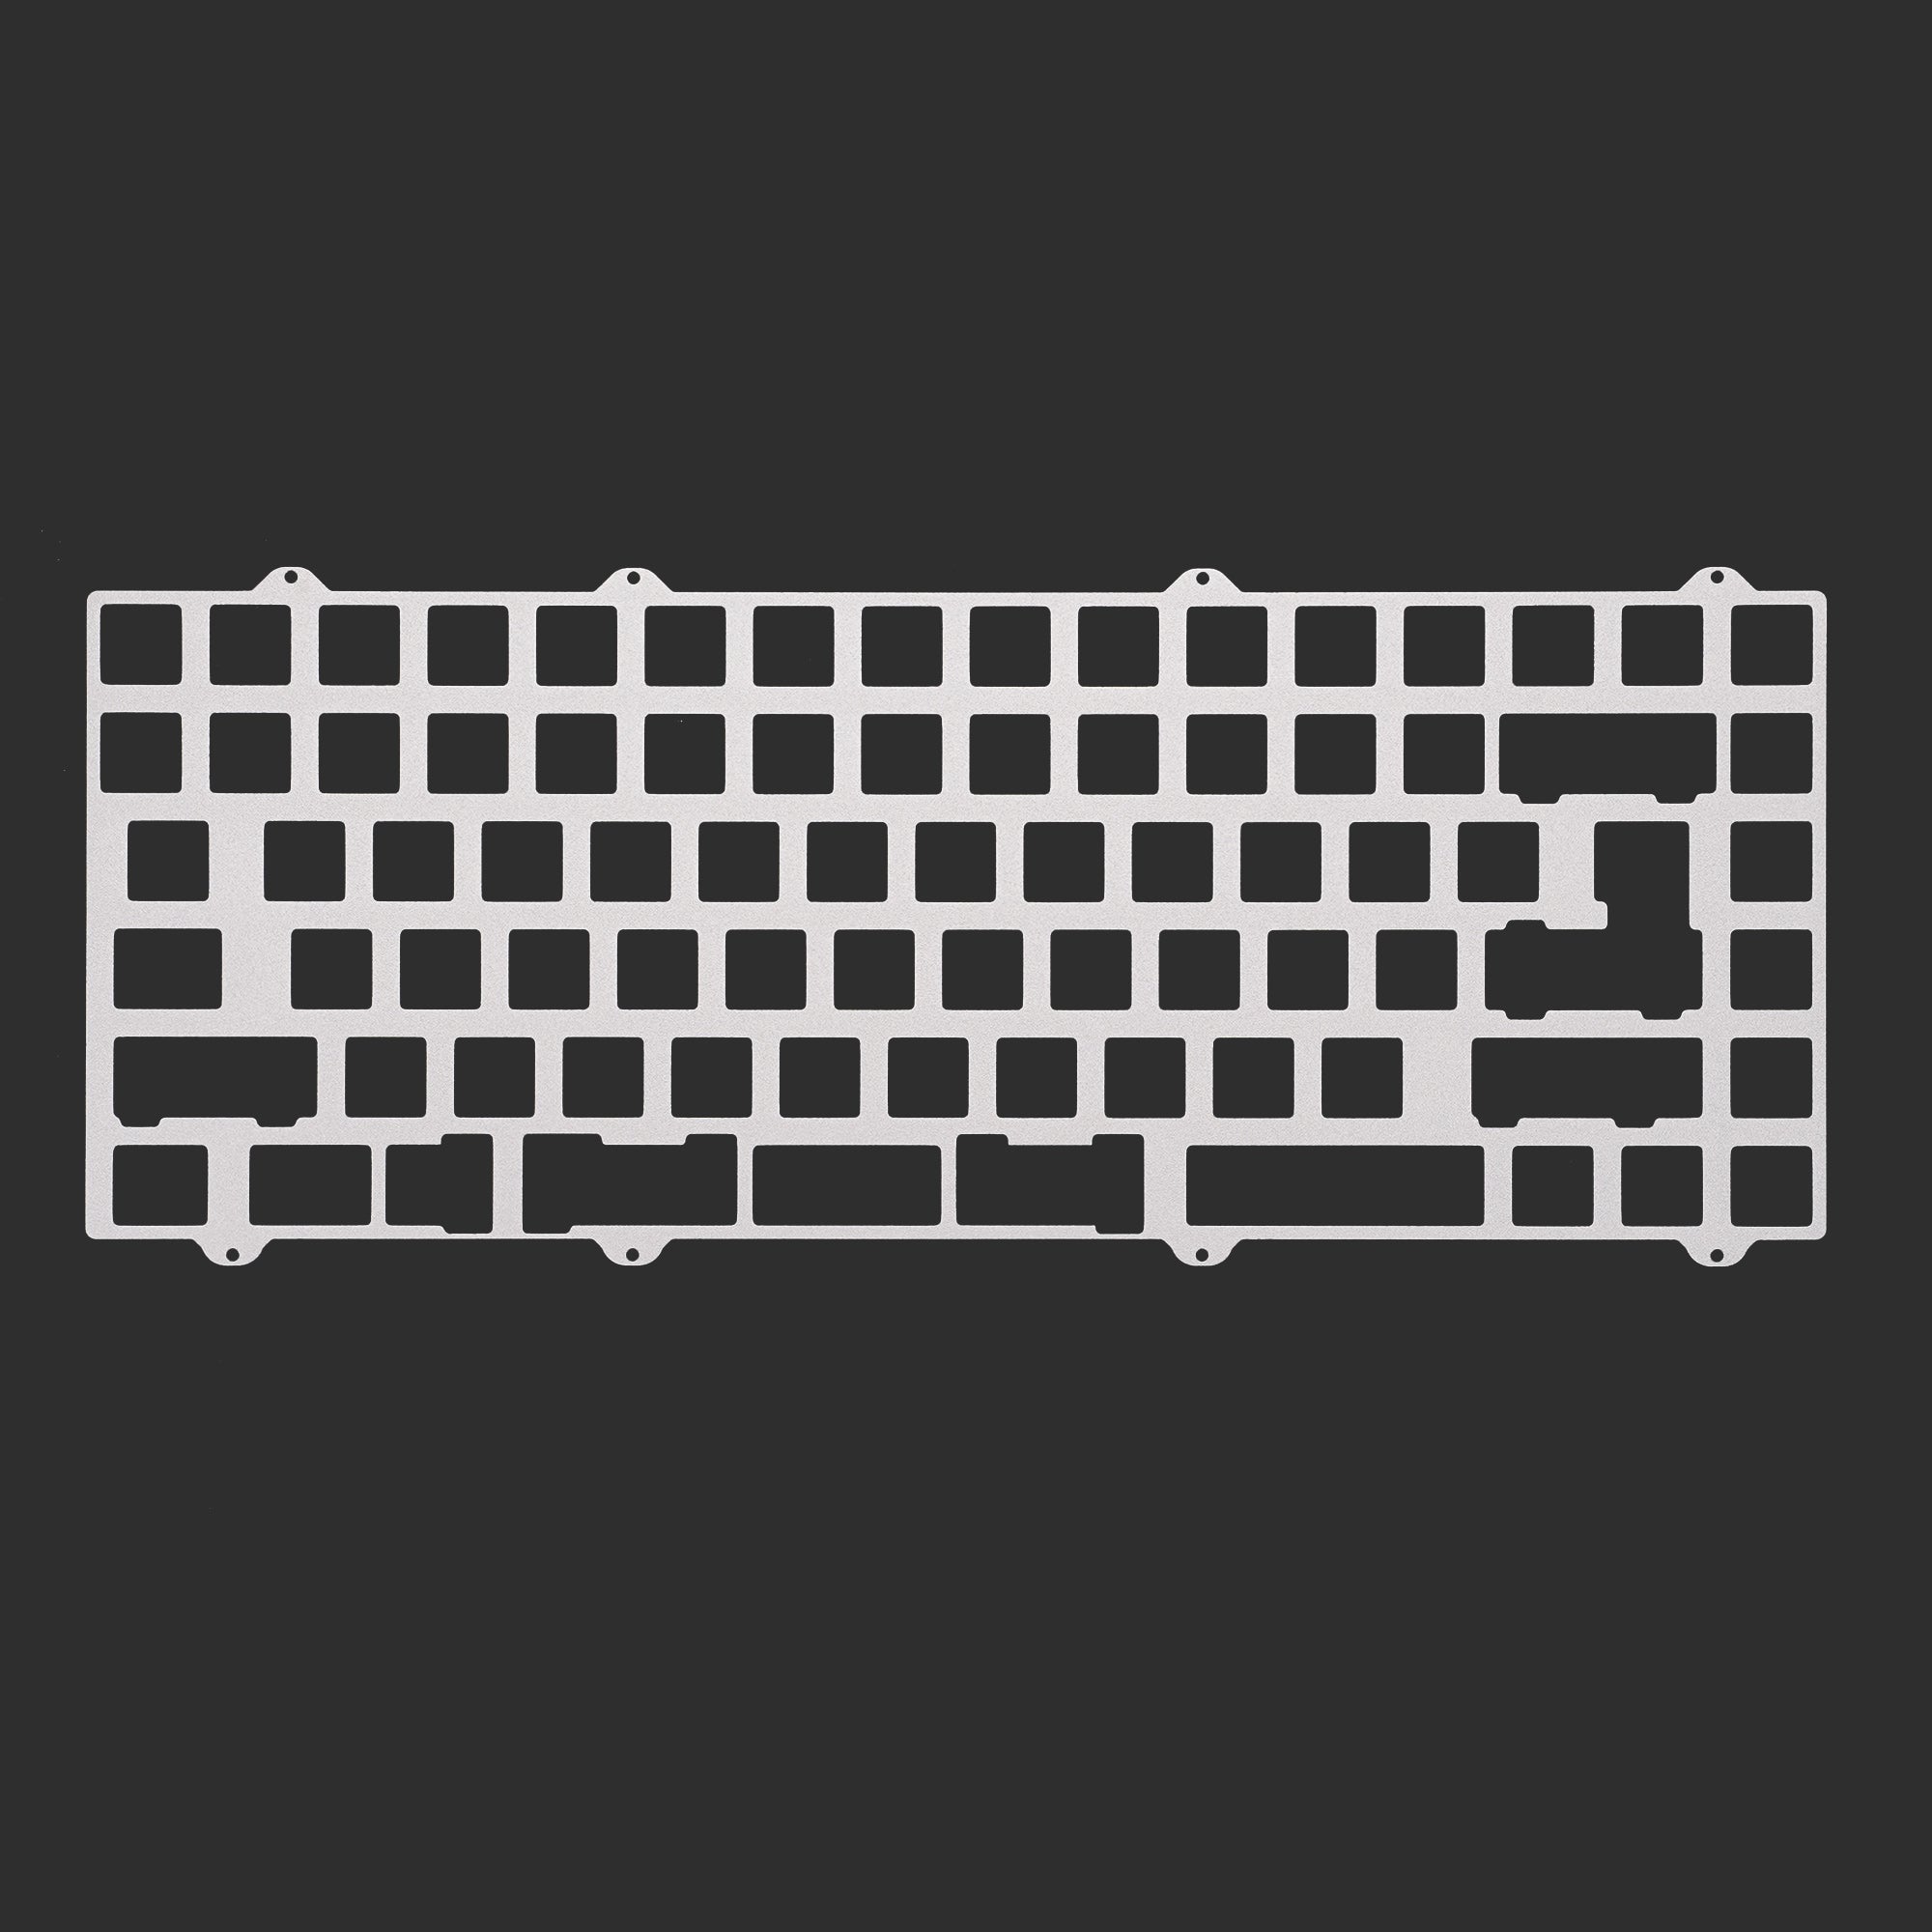 KBDfans Custom Keyboard KBD75 V3.1 Aluminum/ Brass/Polycarbonate Plate